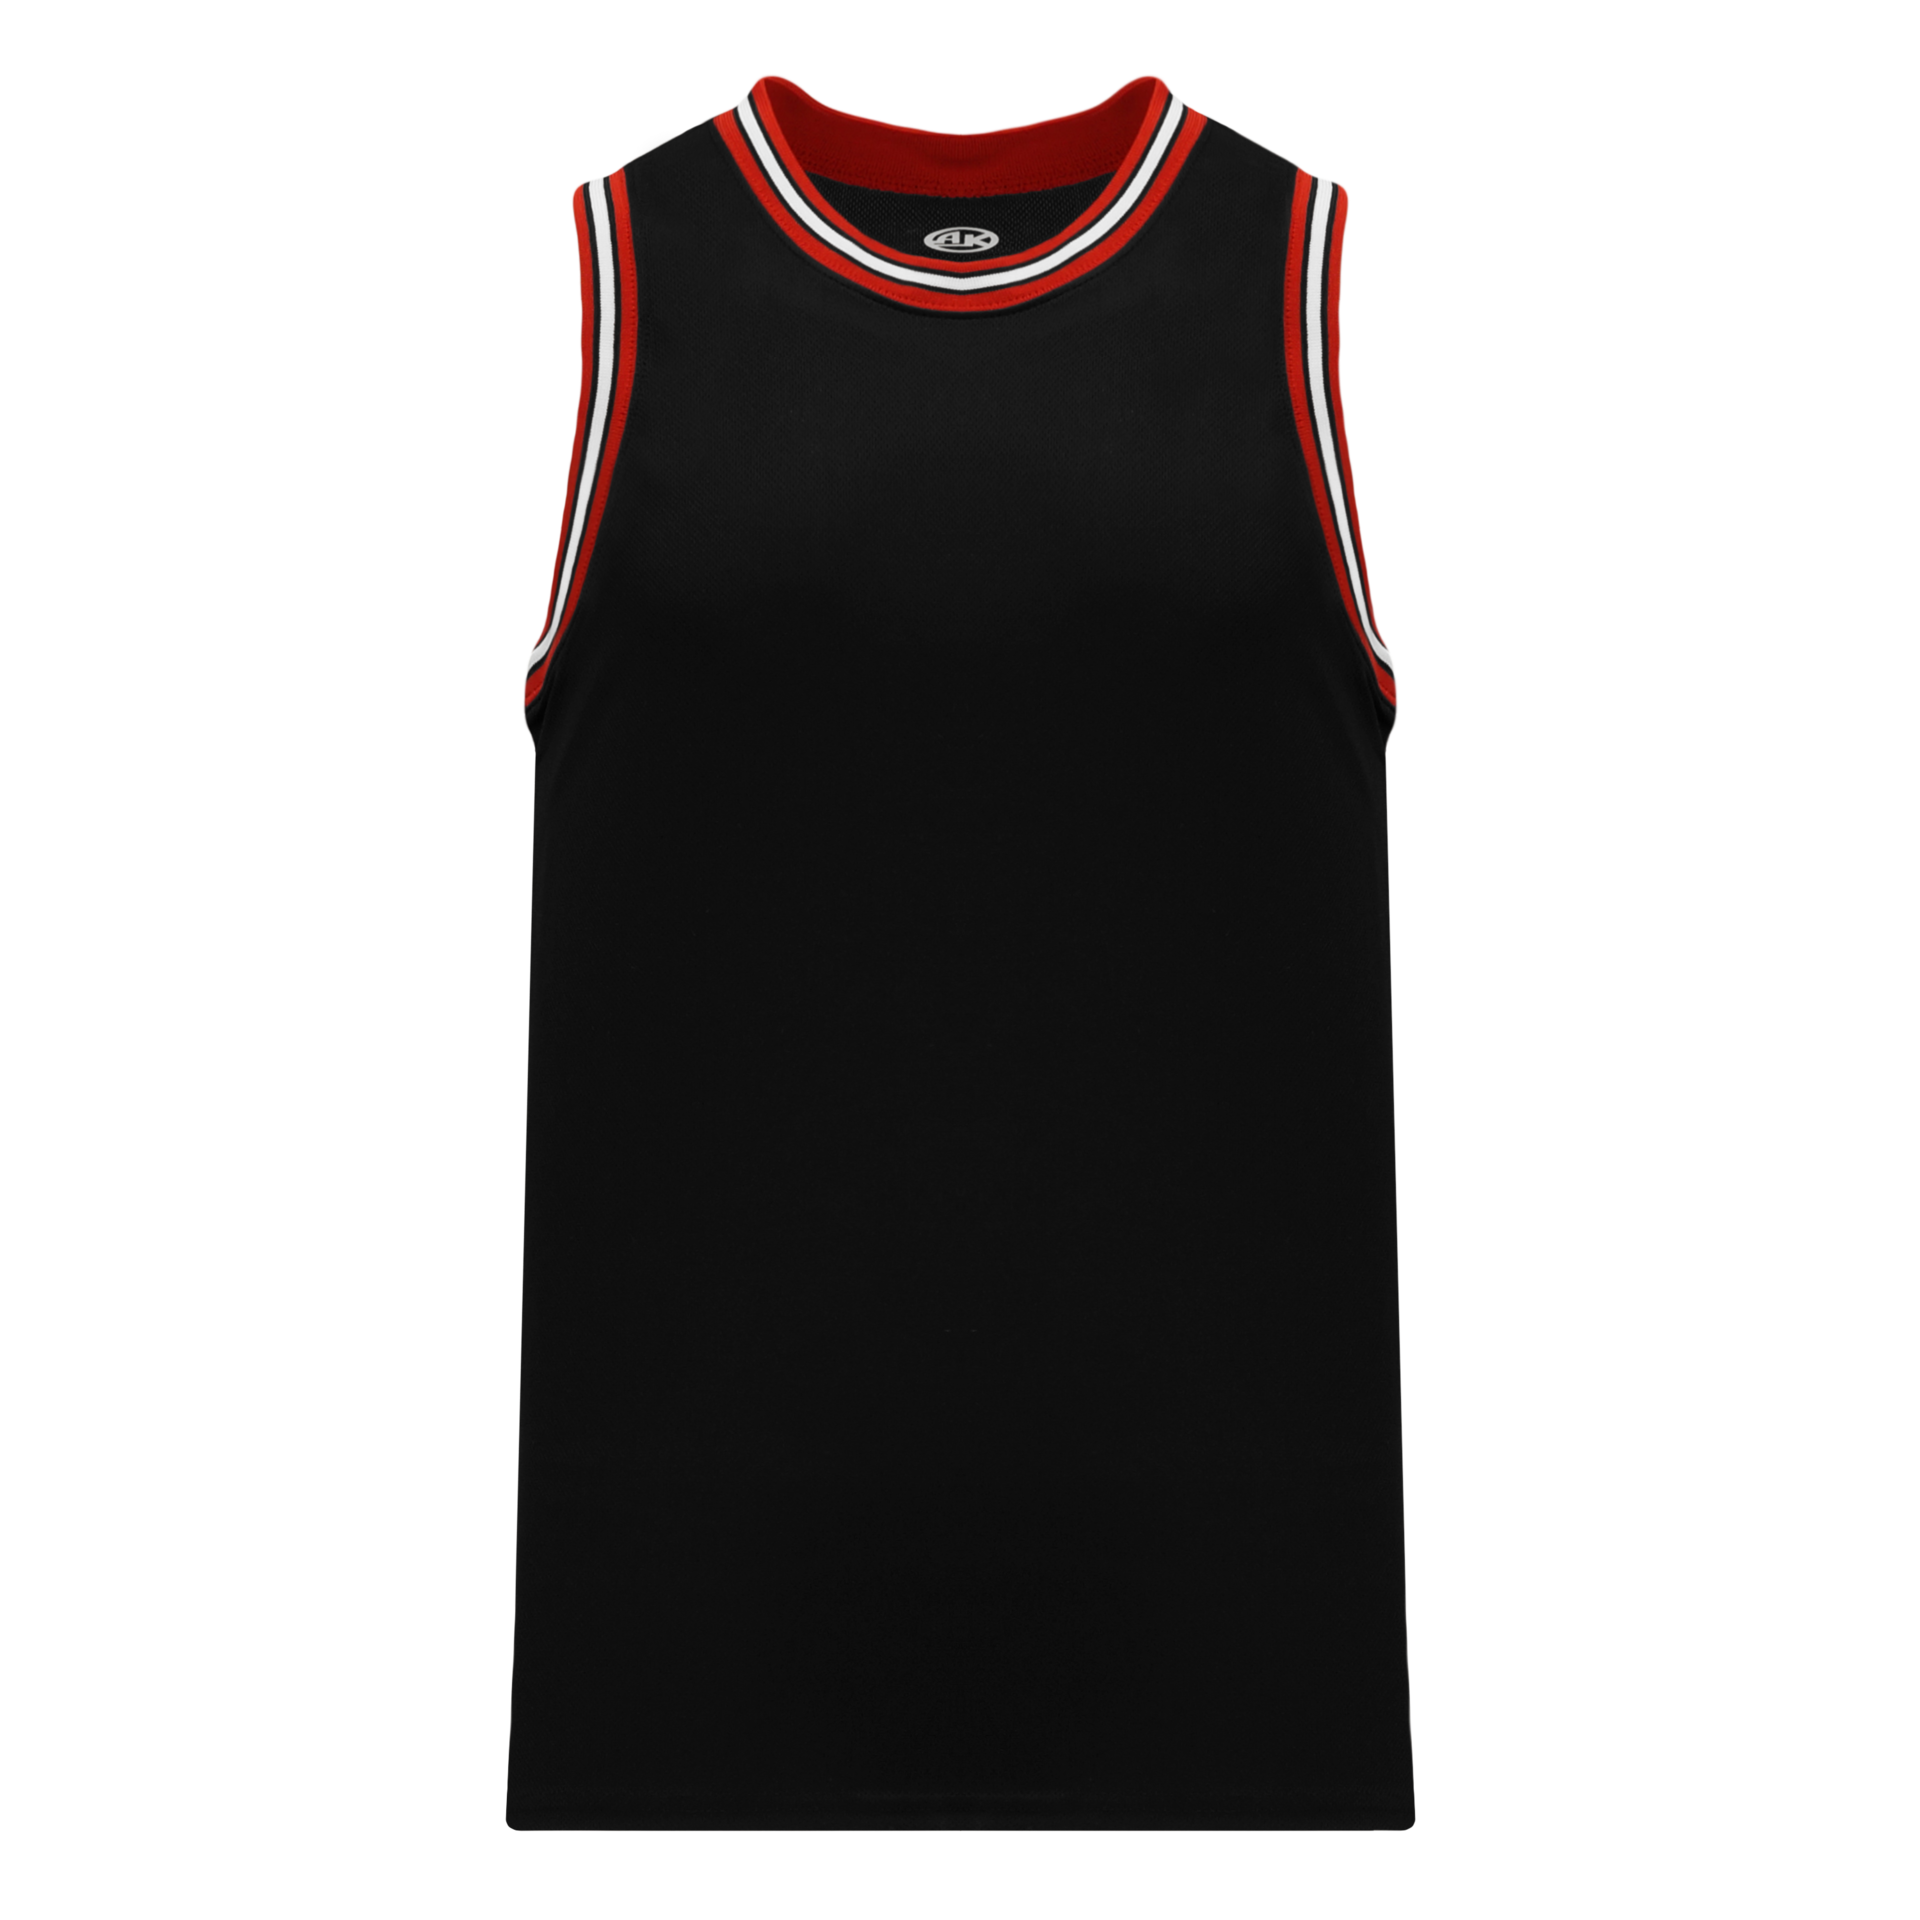 Athletic Knit (AK) B1710A-348 Adult Chicago Bulls Black Pro Basketball Jersey Medium